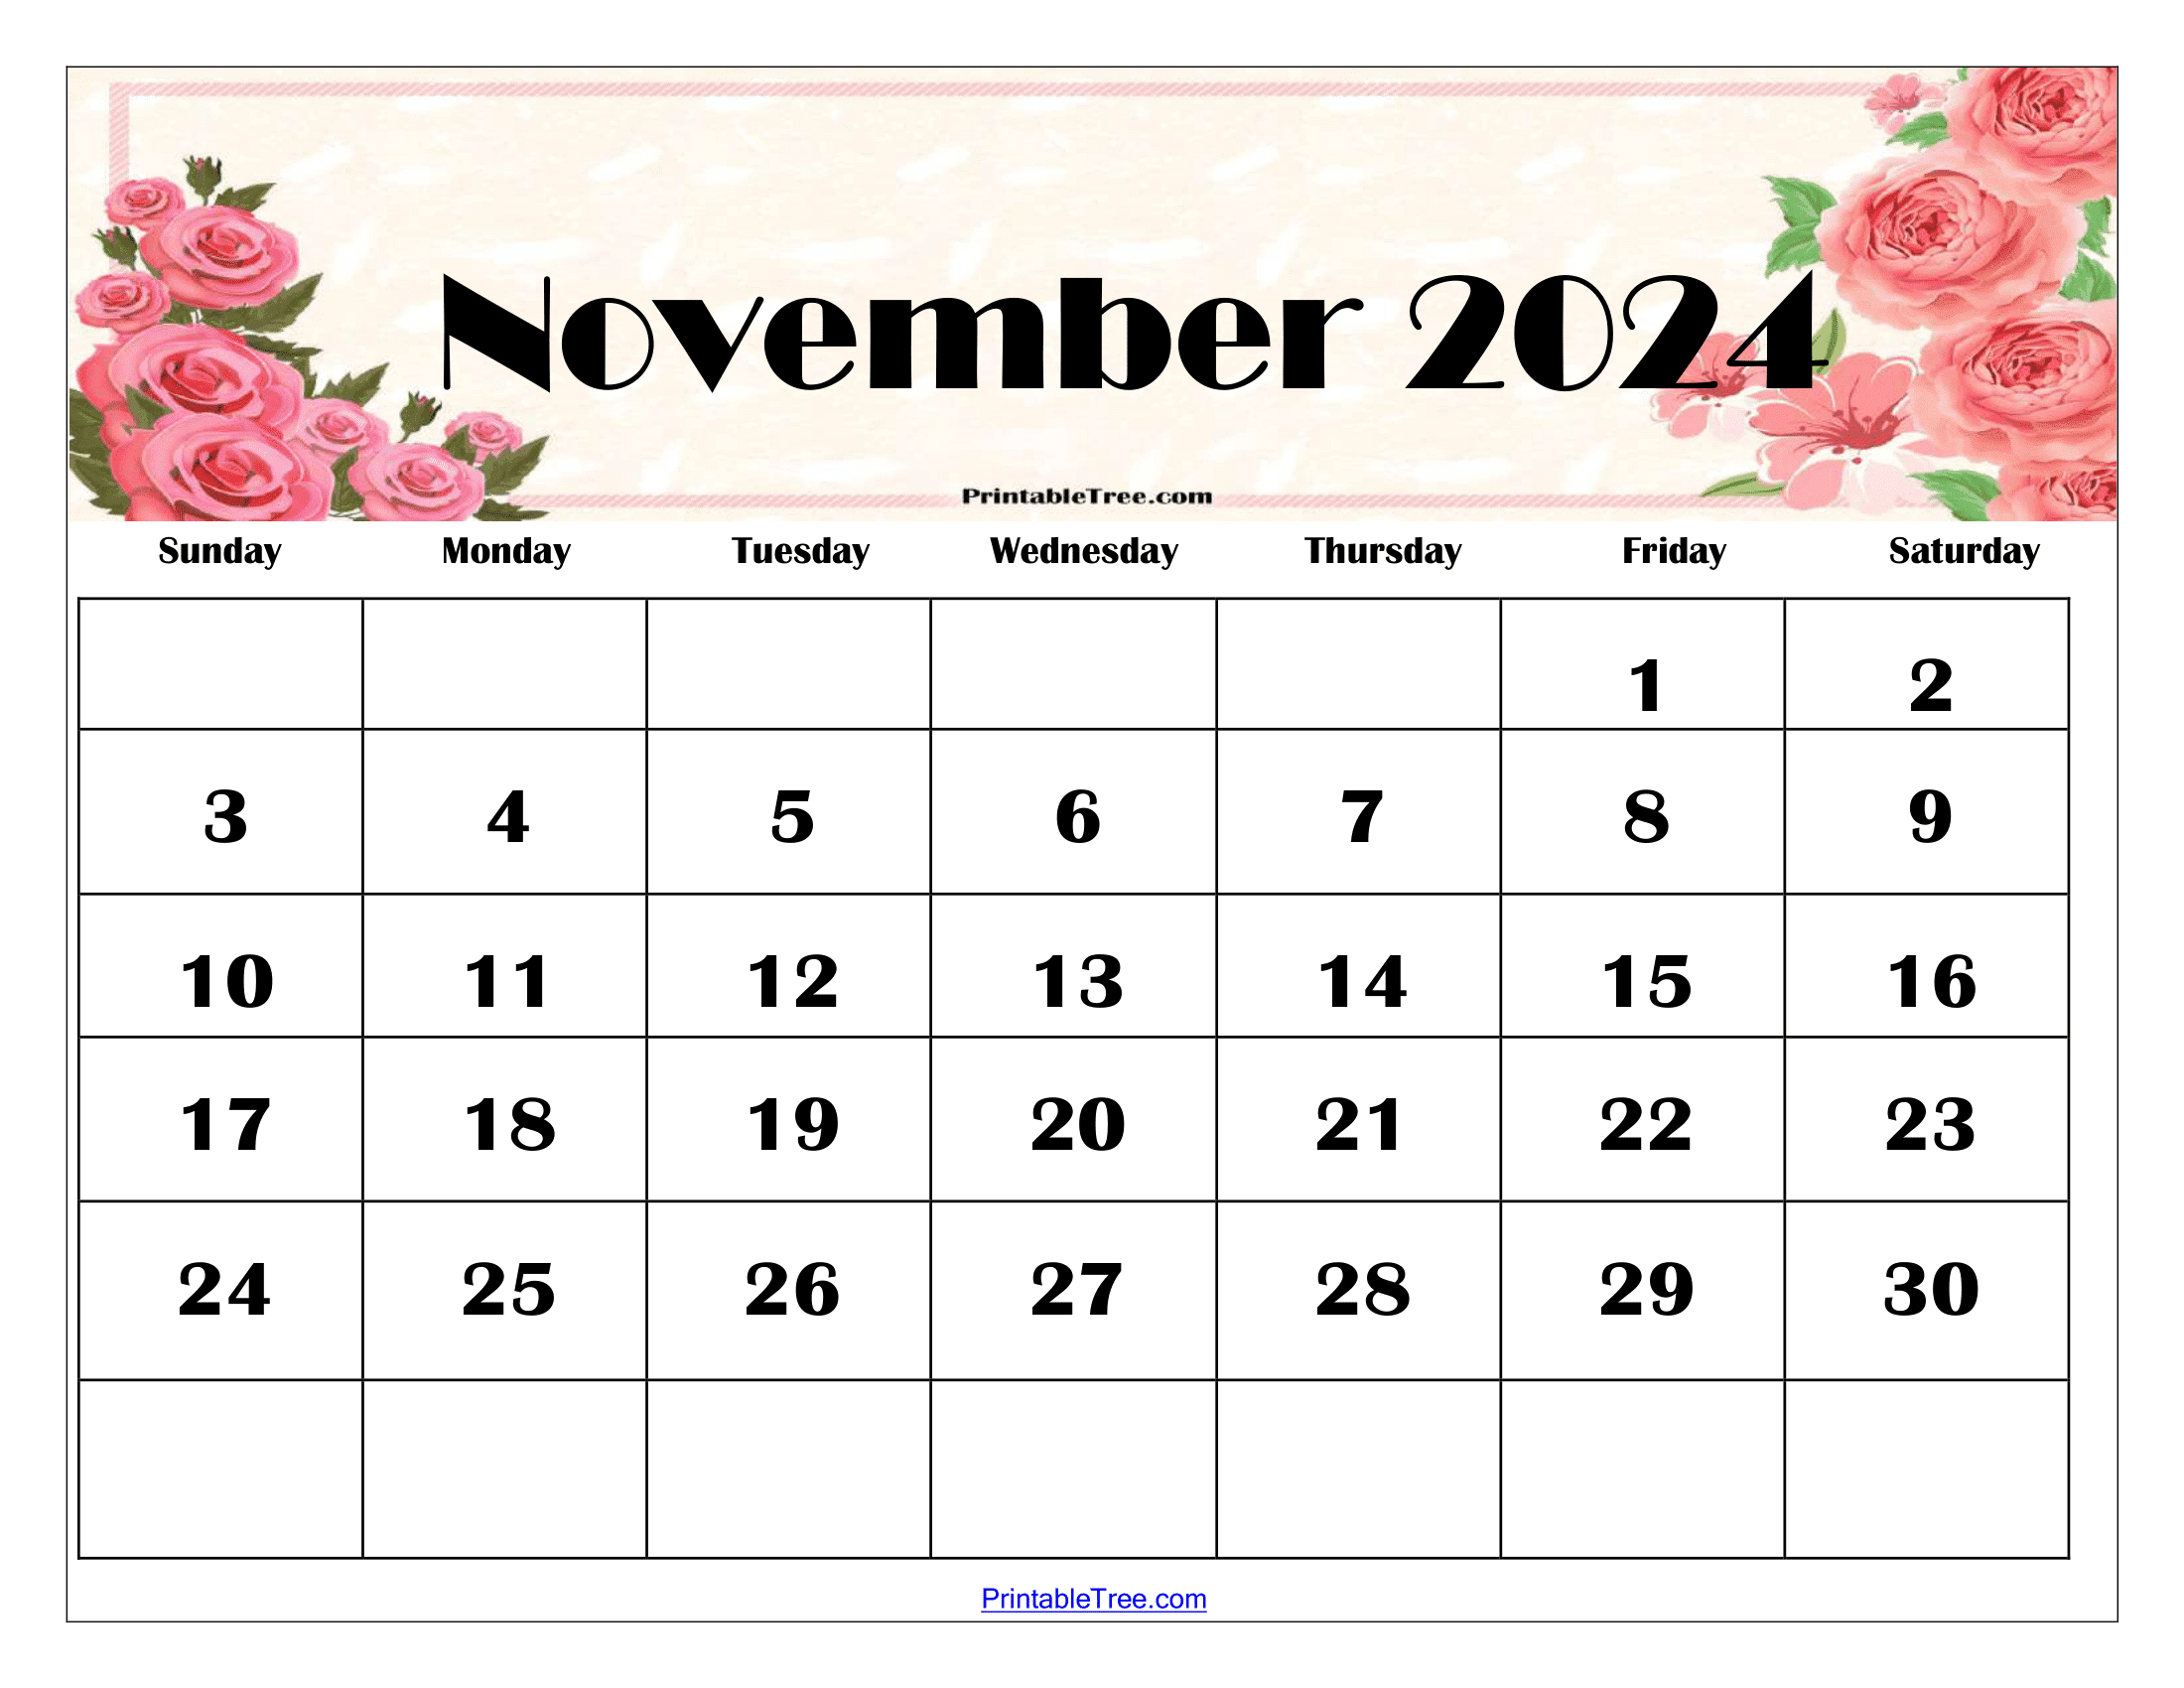 November 2024 Calendar Printable Pdf Template With Holidays throughout Free Printable Blank Calendar 2024 November